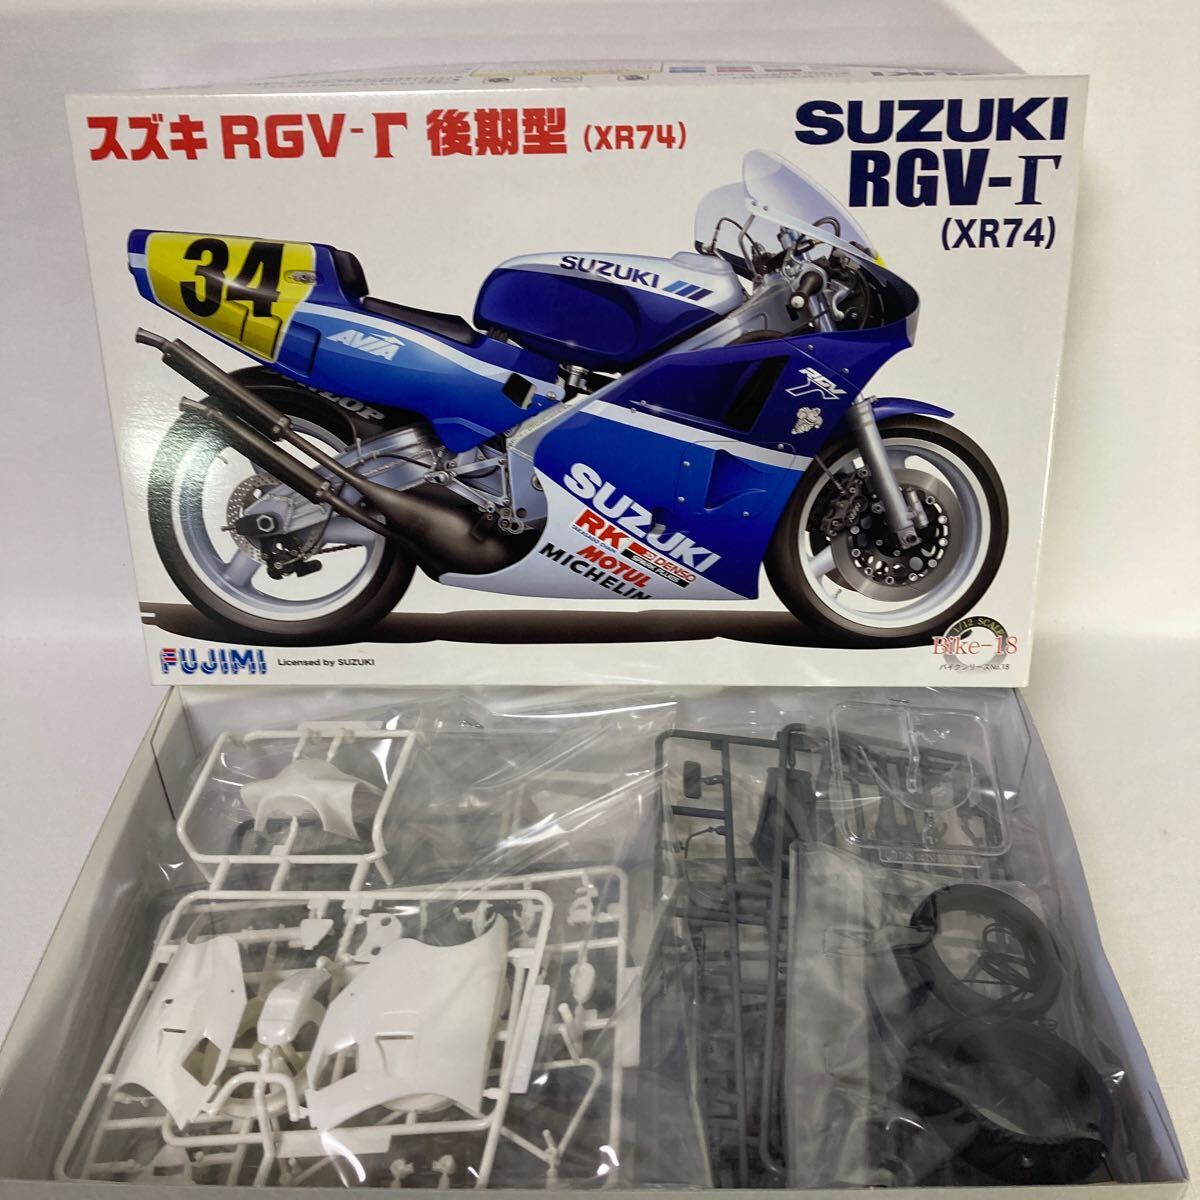  Fujimi 1/12 Suzuki RGV-Γ (XR74) более поздняя модель пластиковая модель не собран 